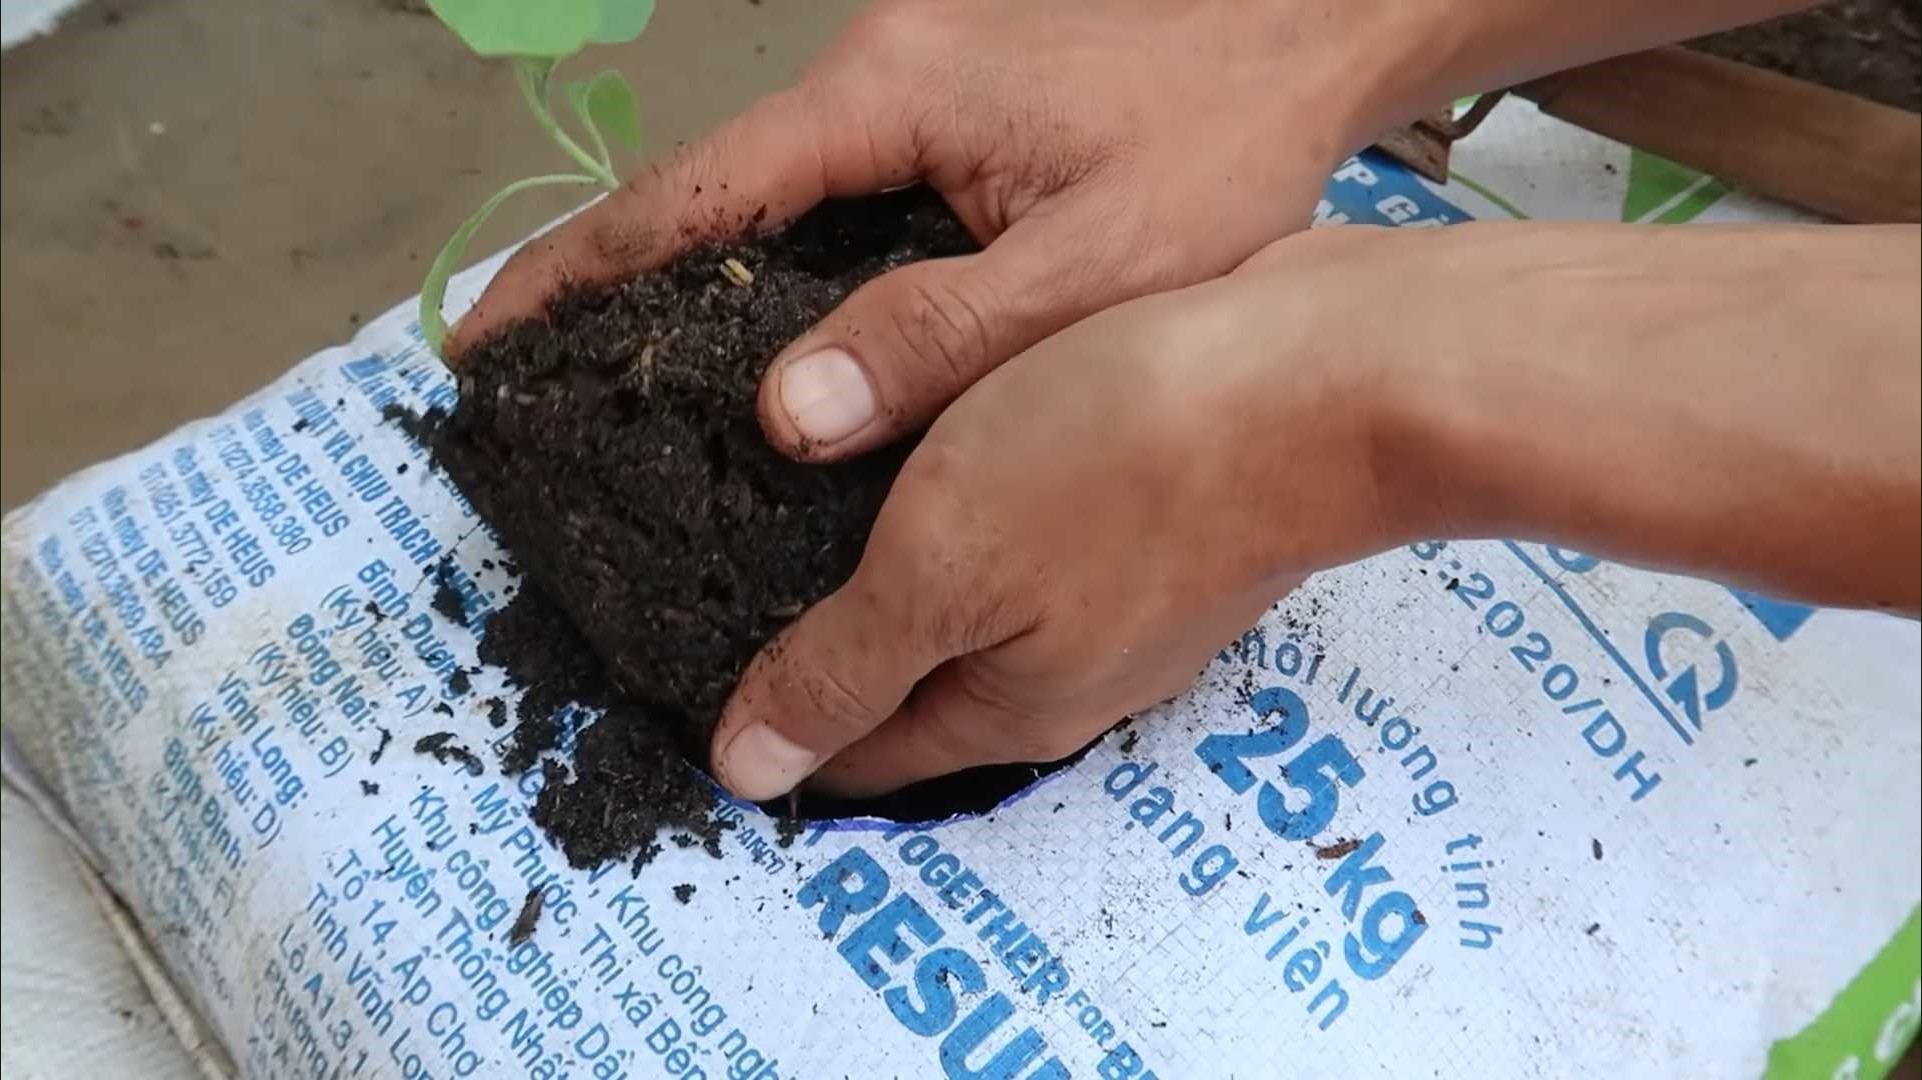 adding soil in a bag